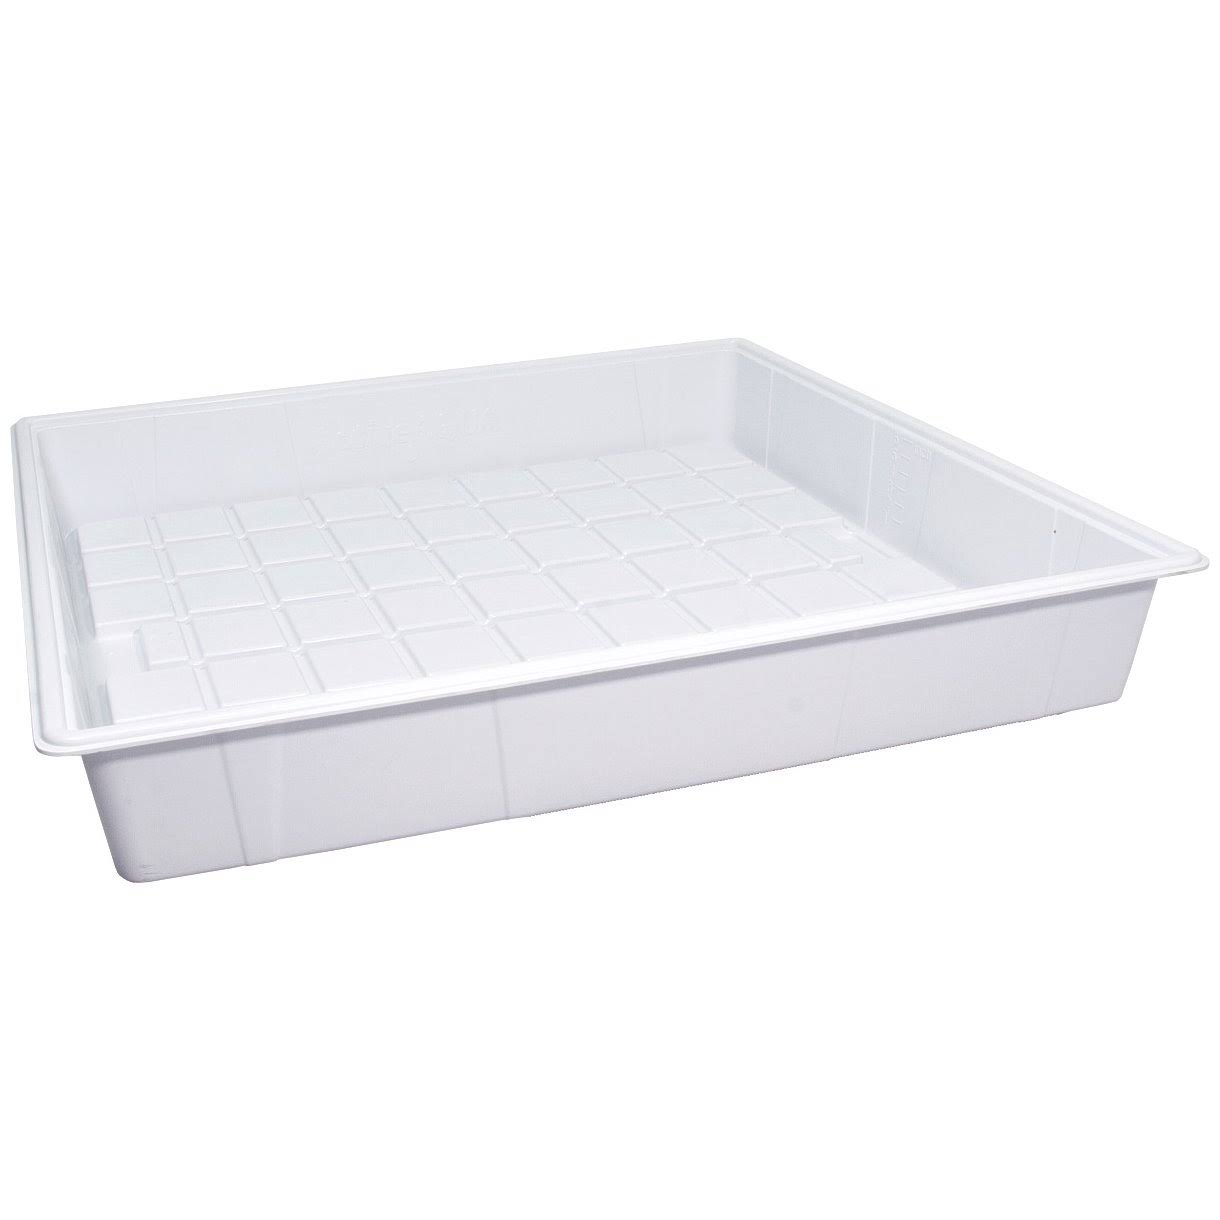 Active Aqua Premium Flood Table - White, 4' x 4'